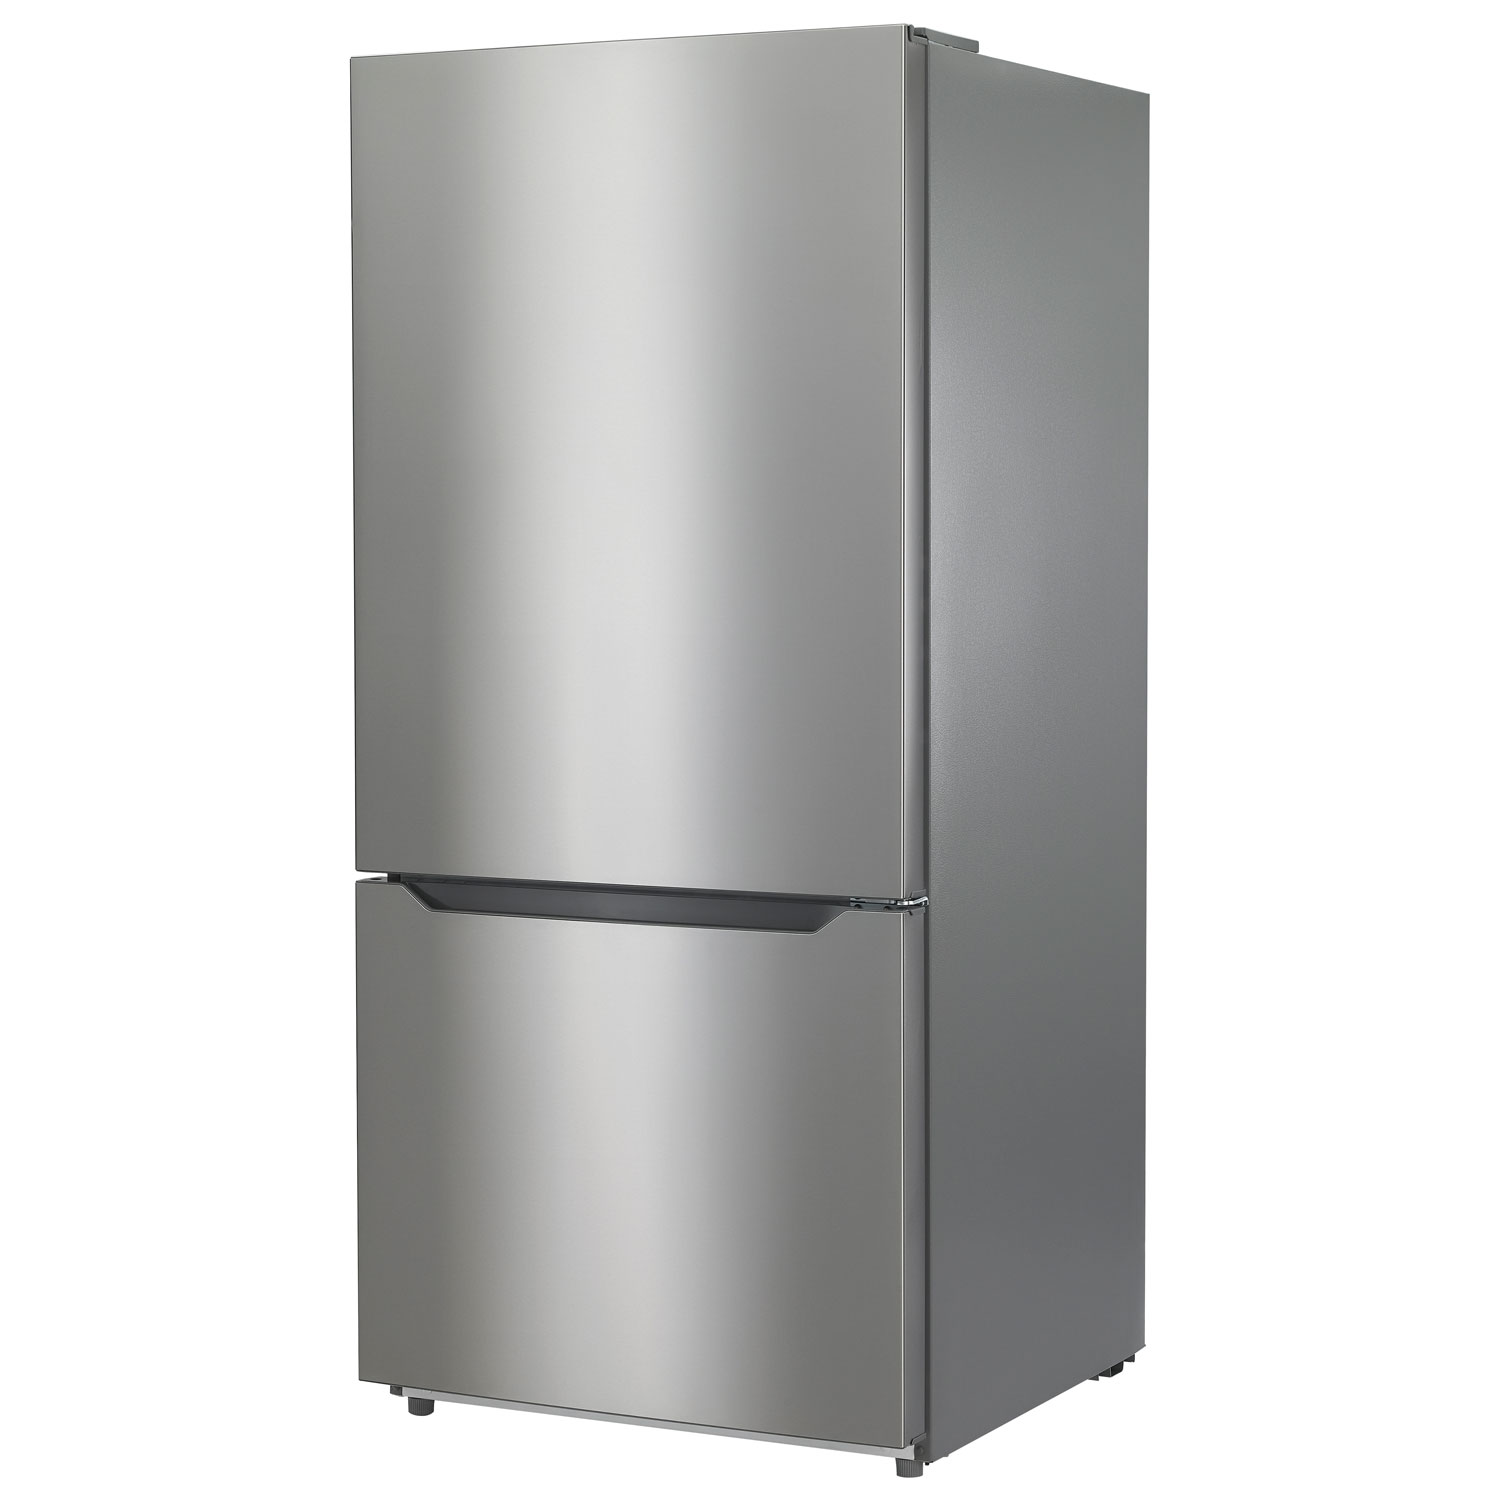 15+ Lg bottom freezer refrigerator beeping ideas in 2021 